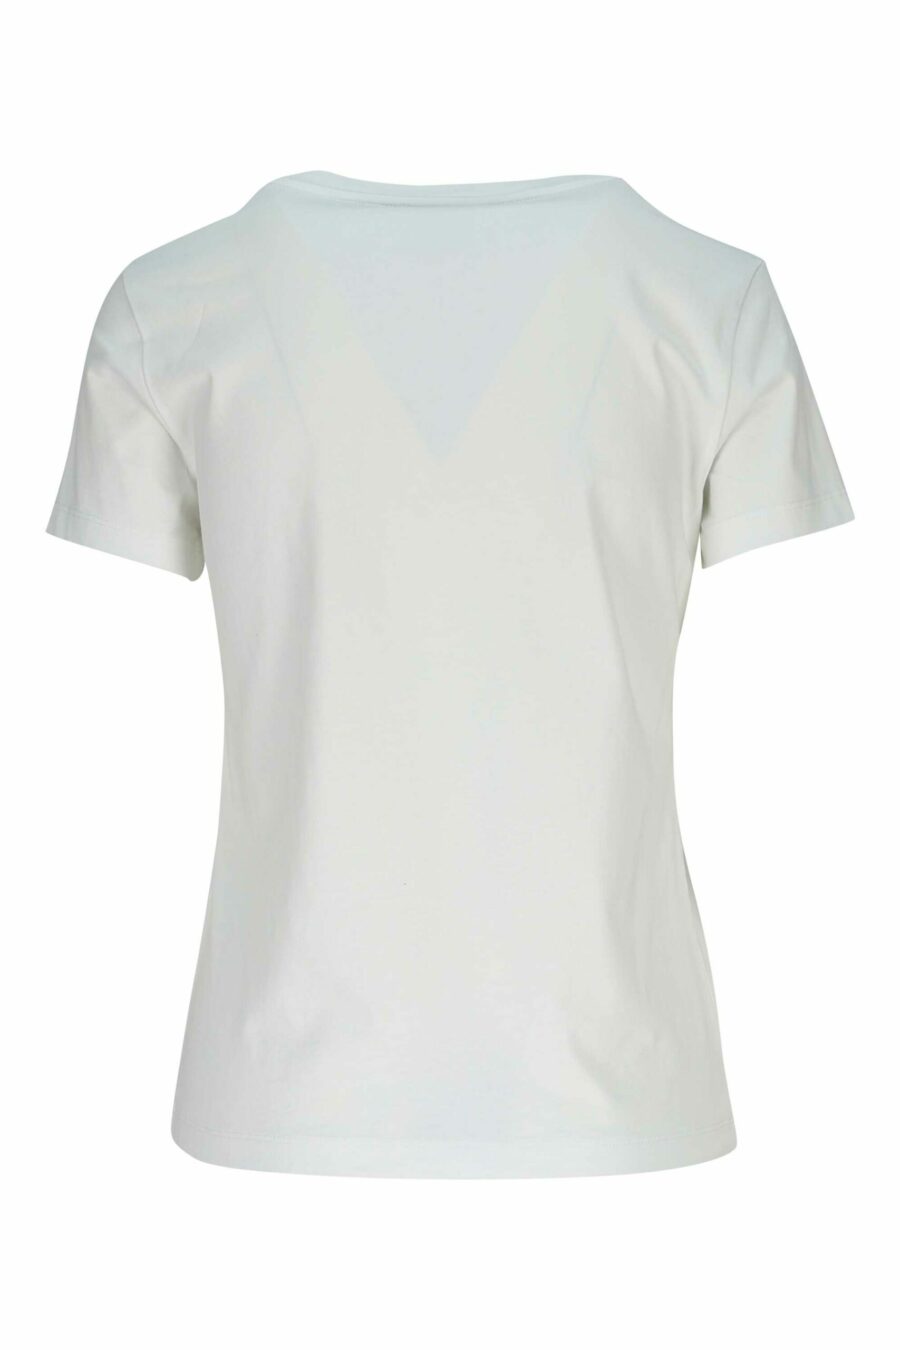 Camiseta blanca con logo "kenzo rose" negra - 3612230637665 1 scaled